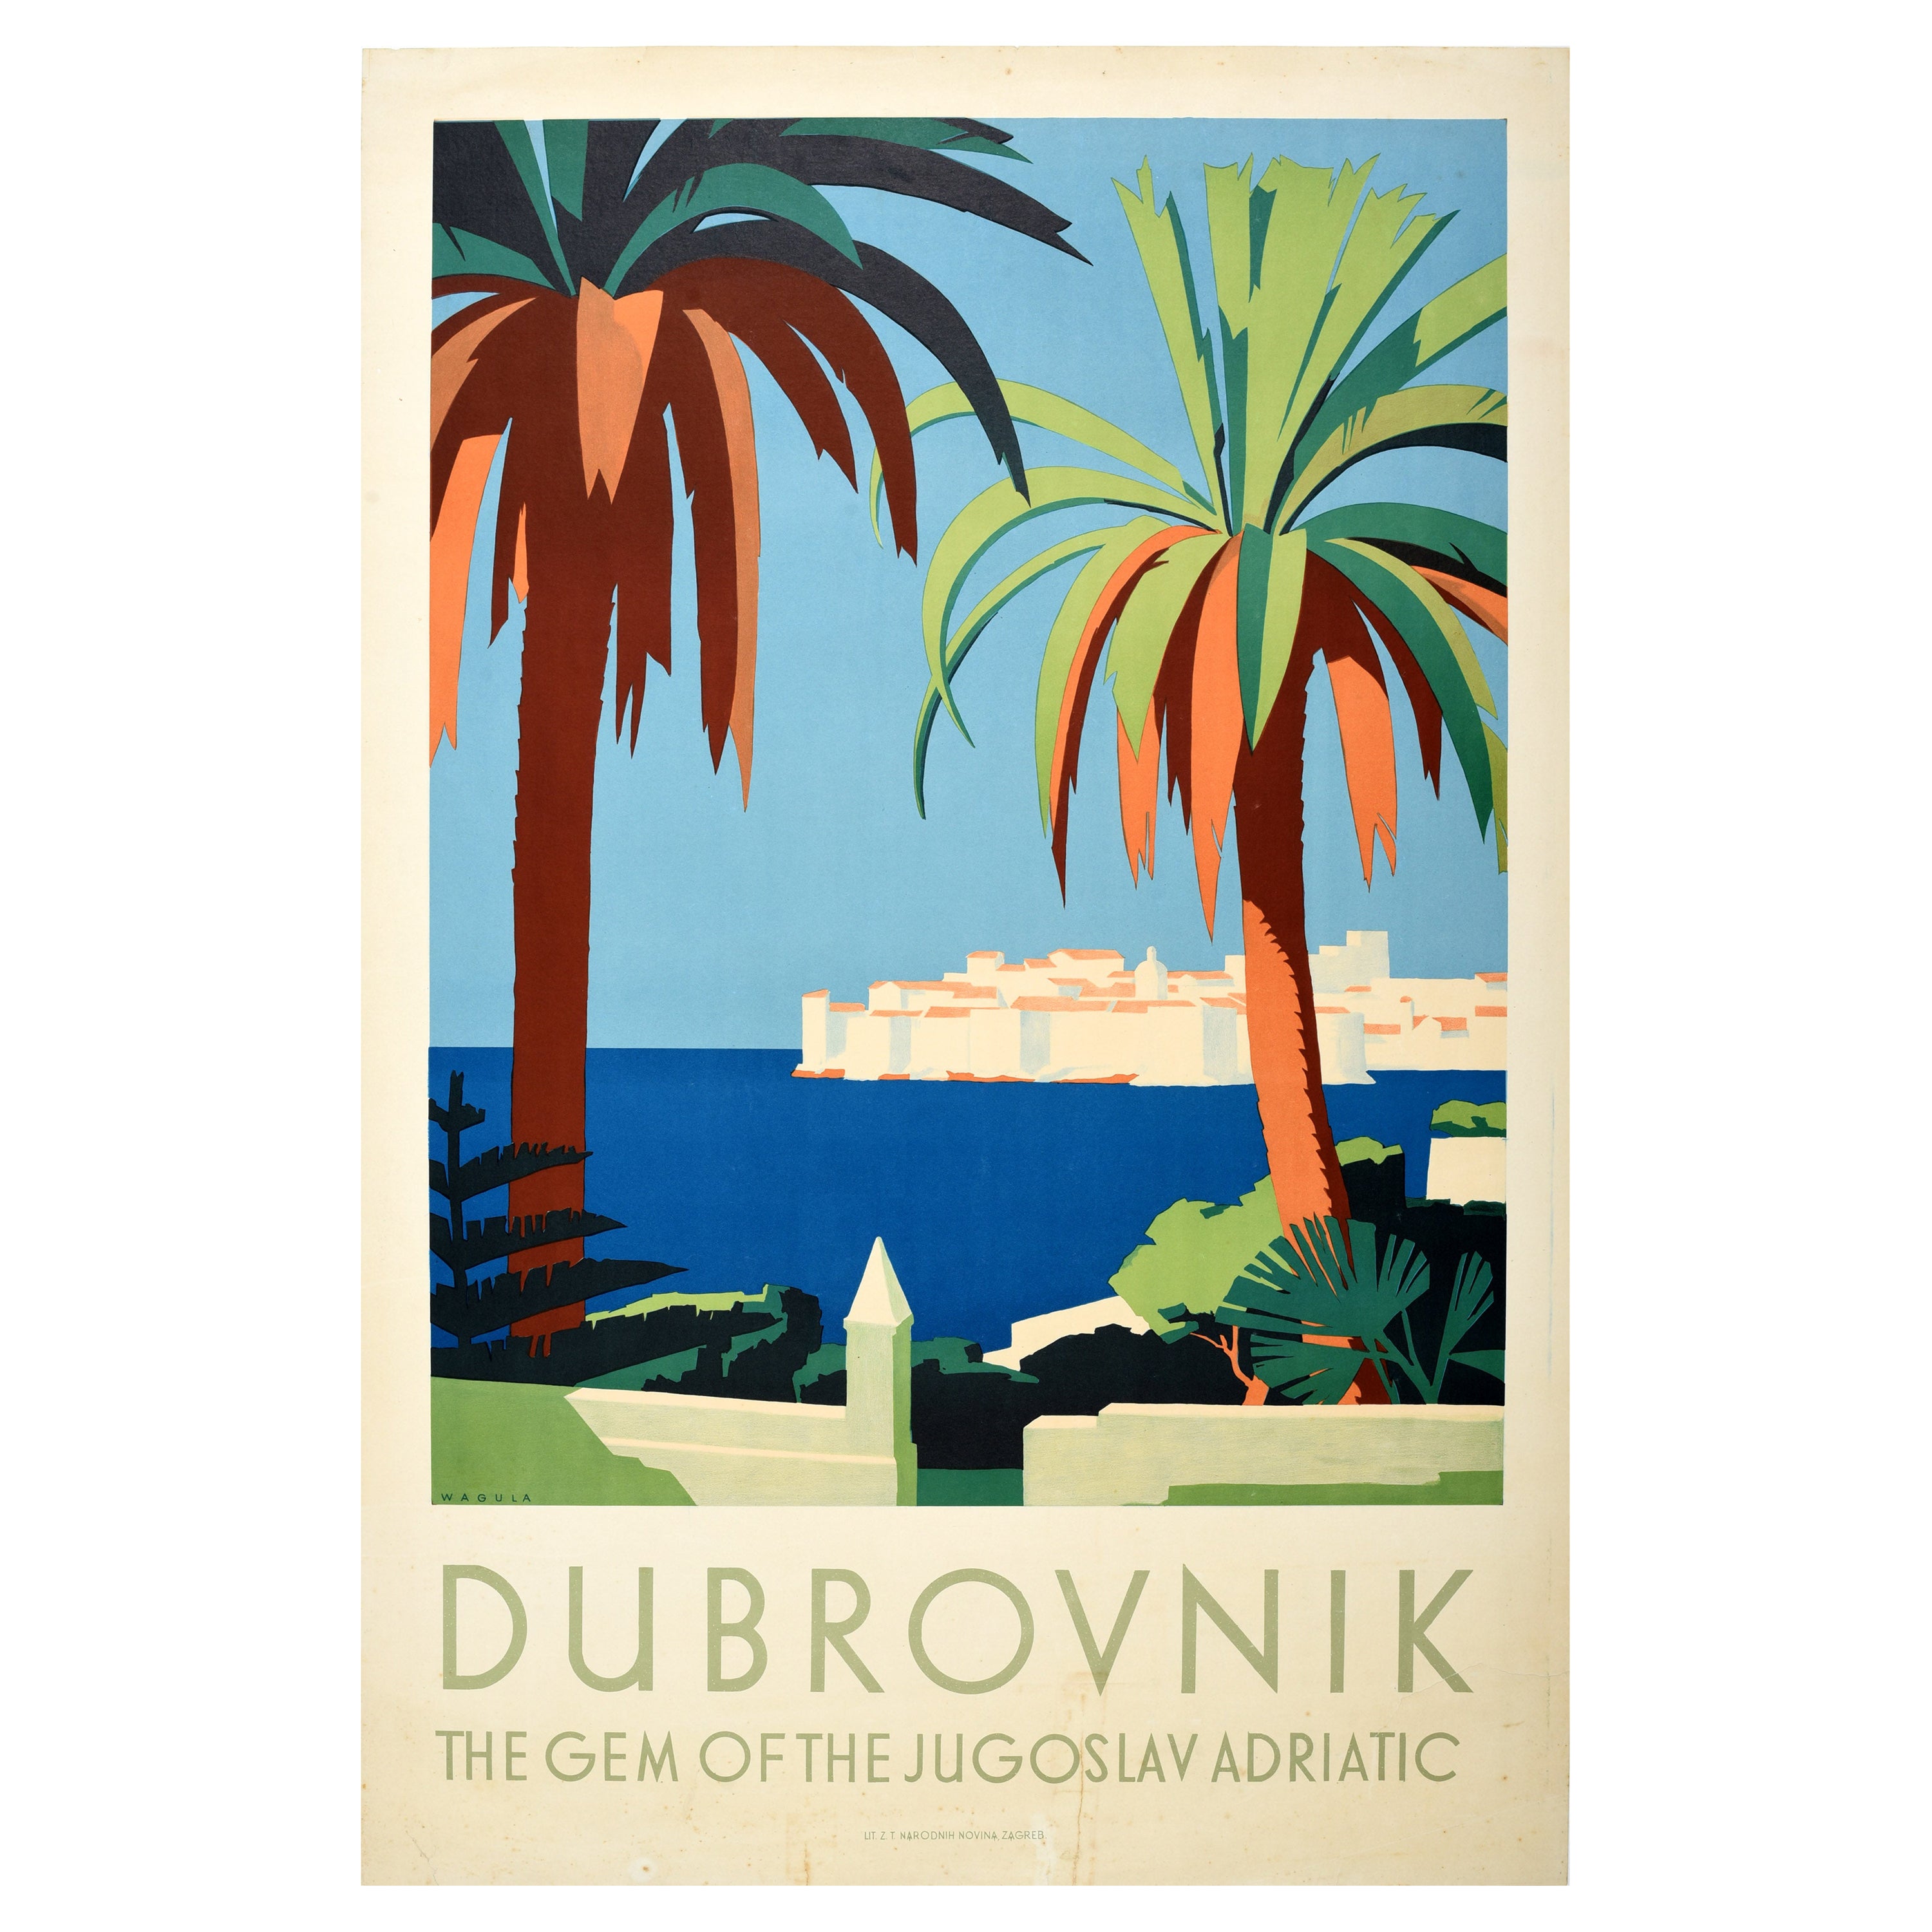 Original Vintage Travel Poster Dubrovnik Gem Of The Jugoslav Adriatic Sea City